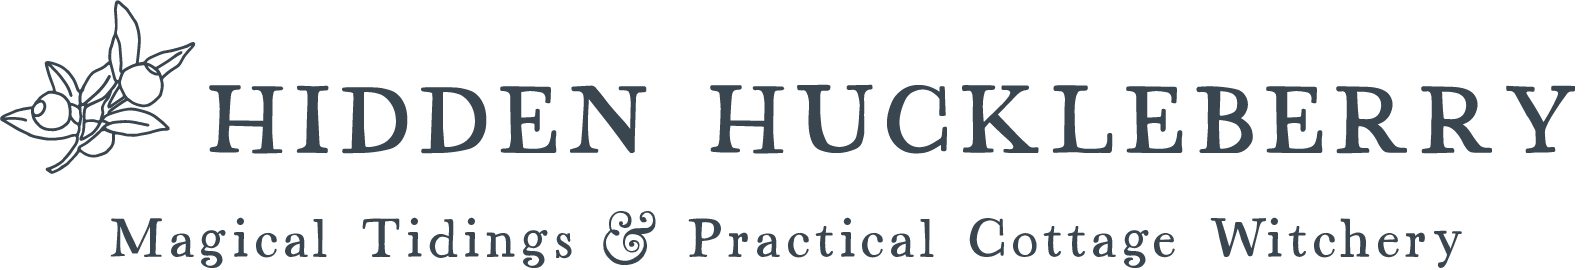 Hidden Huckleberry - Magical Tidings & Practical Cottage Witchery - HiddenHuckleberry.com.